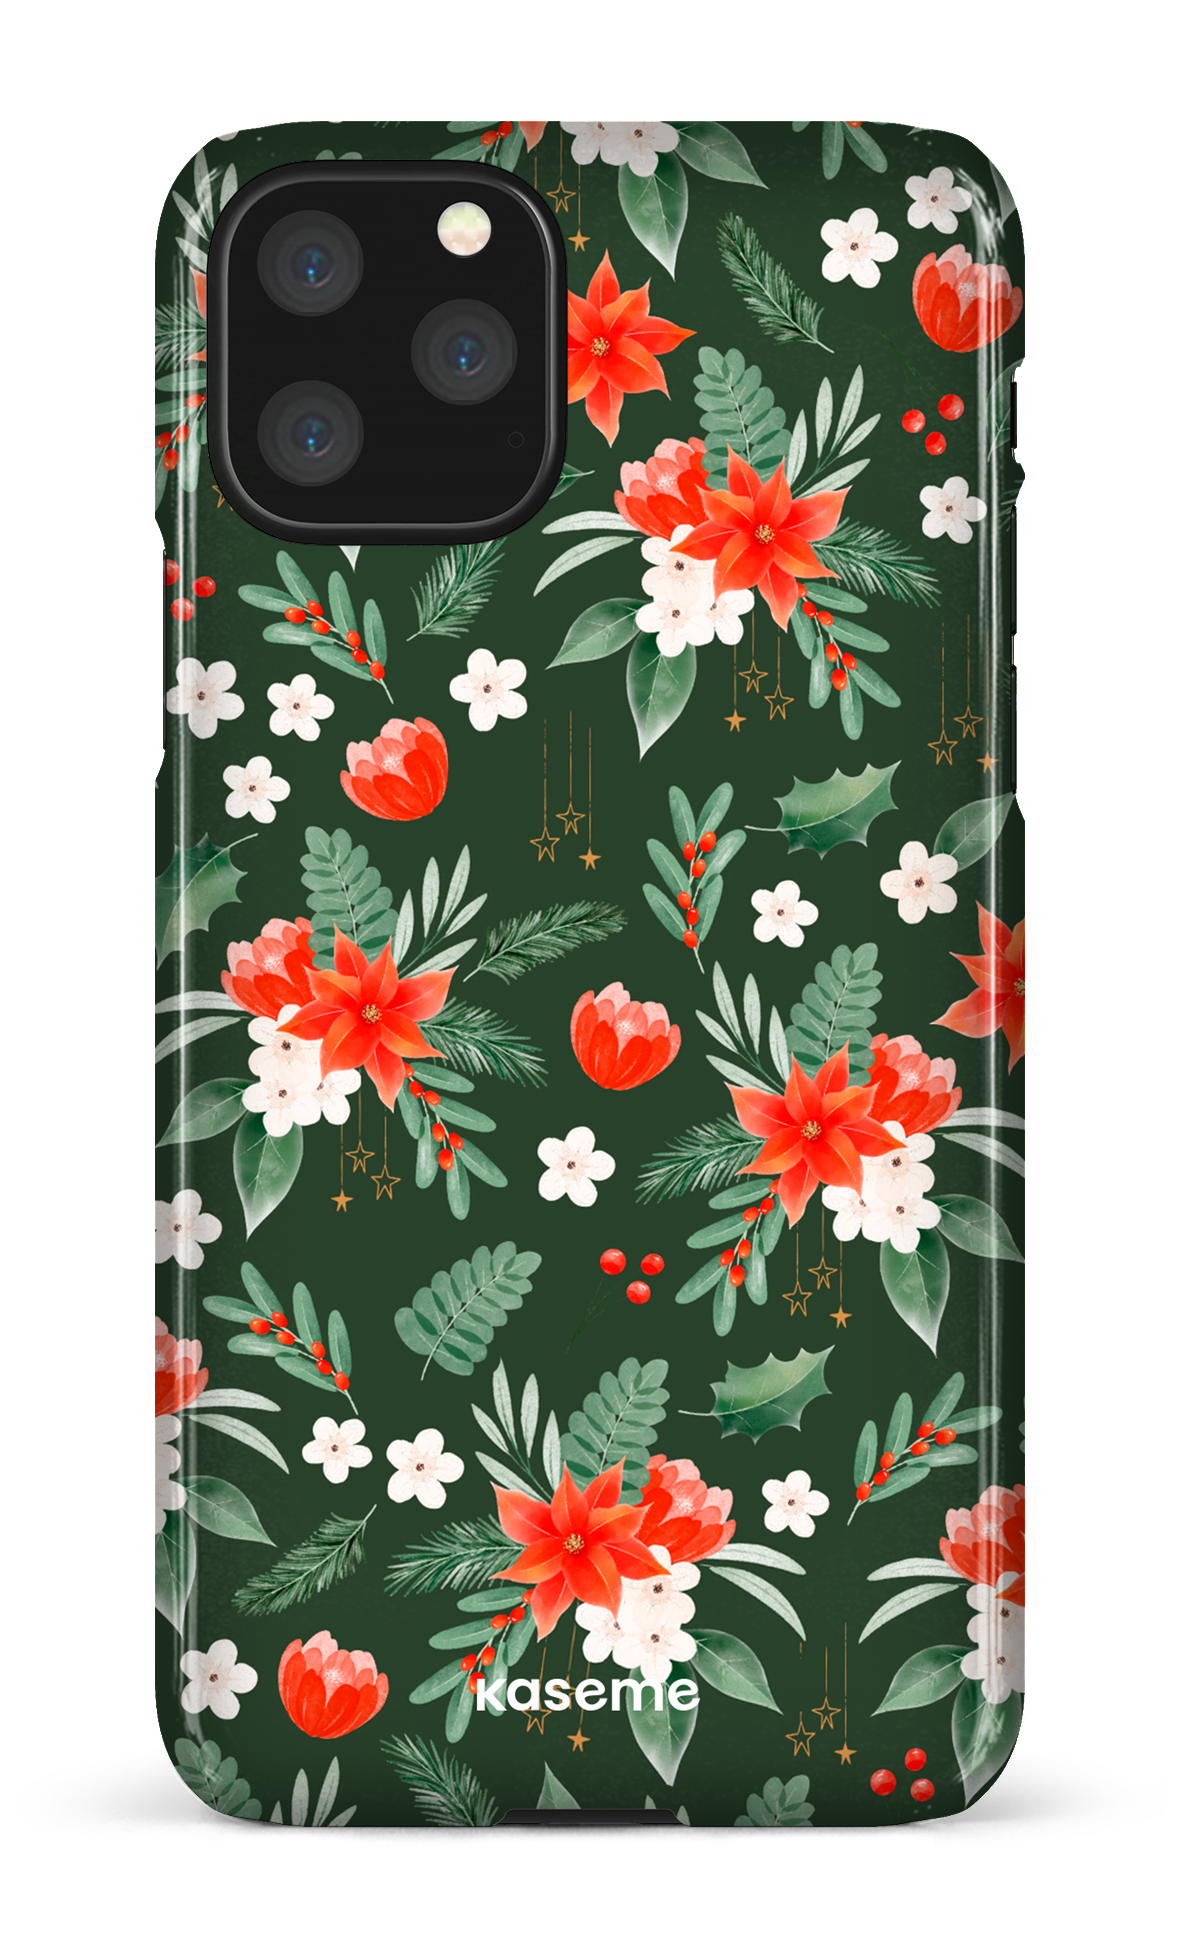 Poinsettia - iPhone 11 Pro